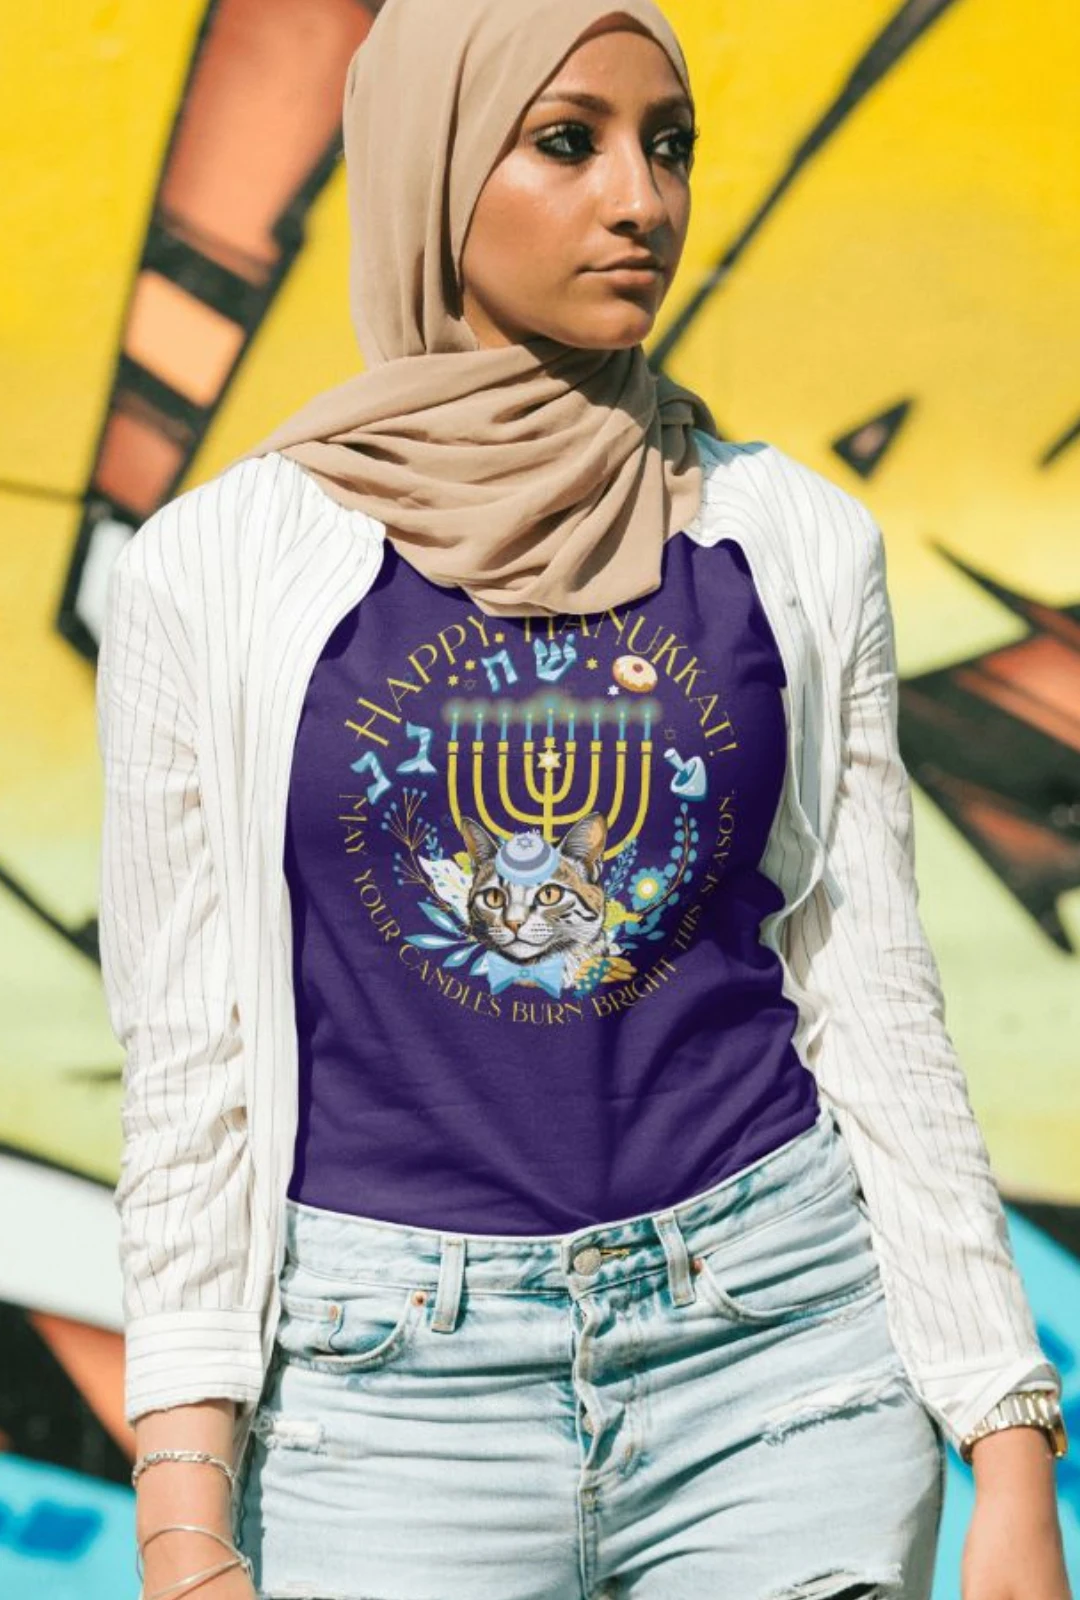 Happy Hanukkat: A Hilarious Hanukkah Shirt for Jewish Cat Lovers!